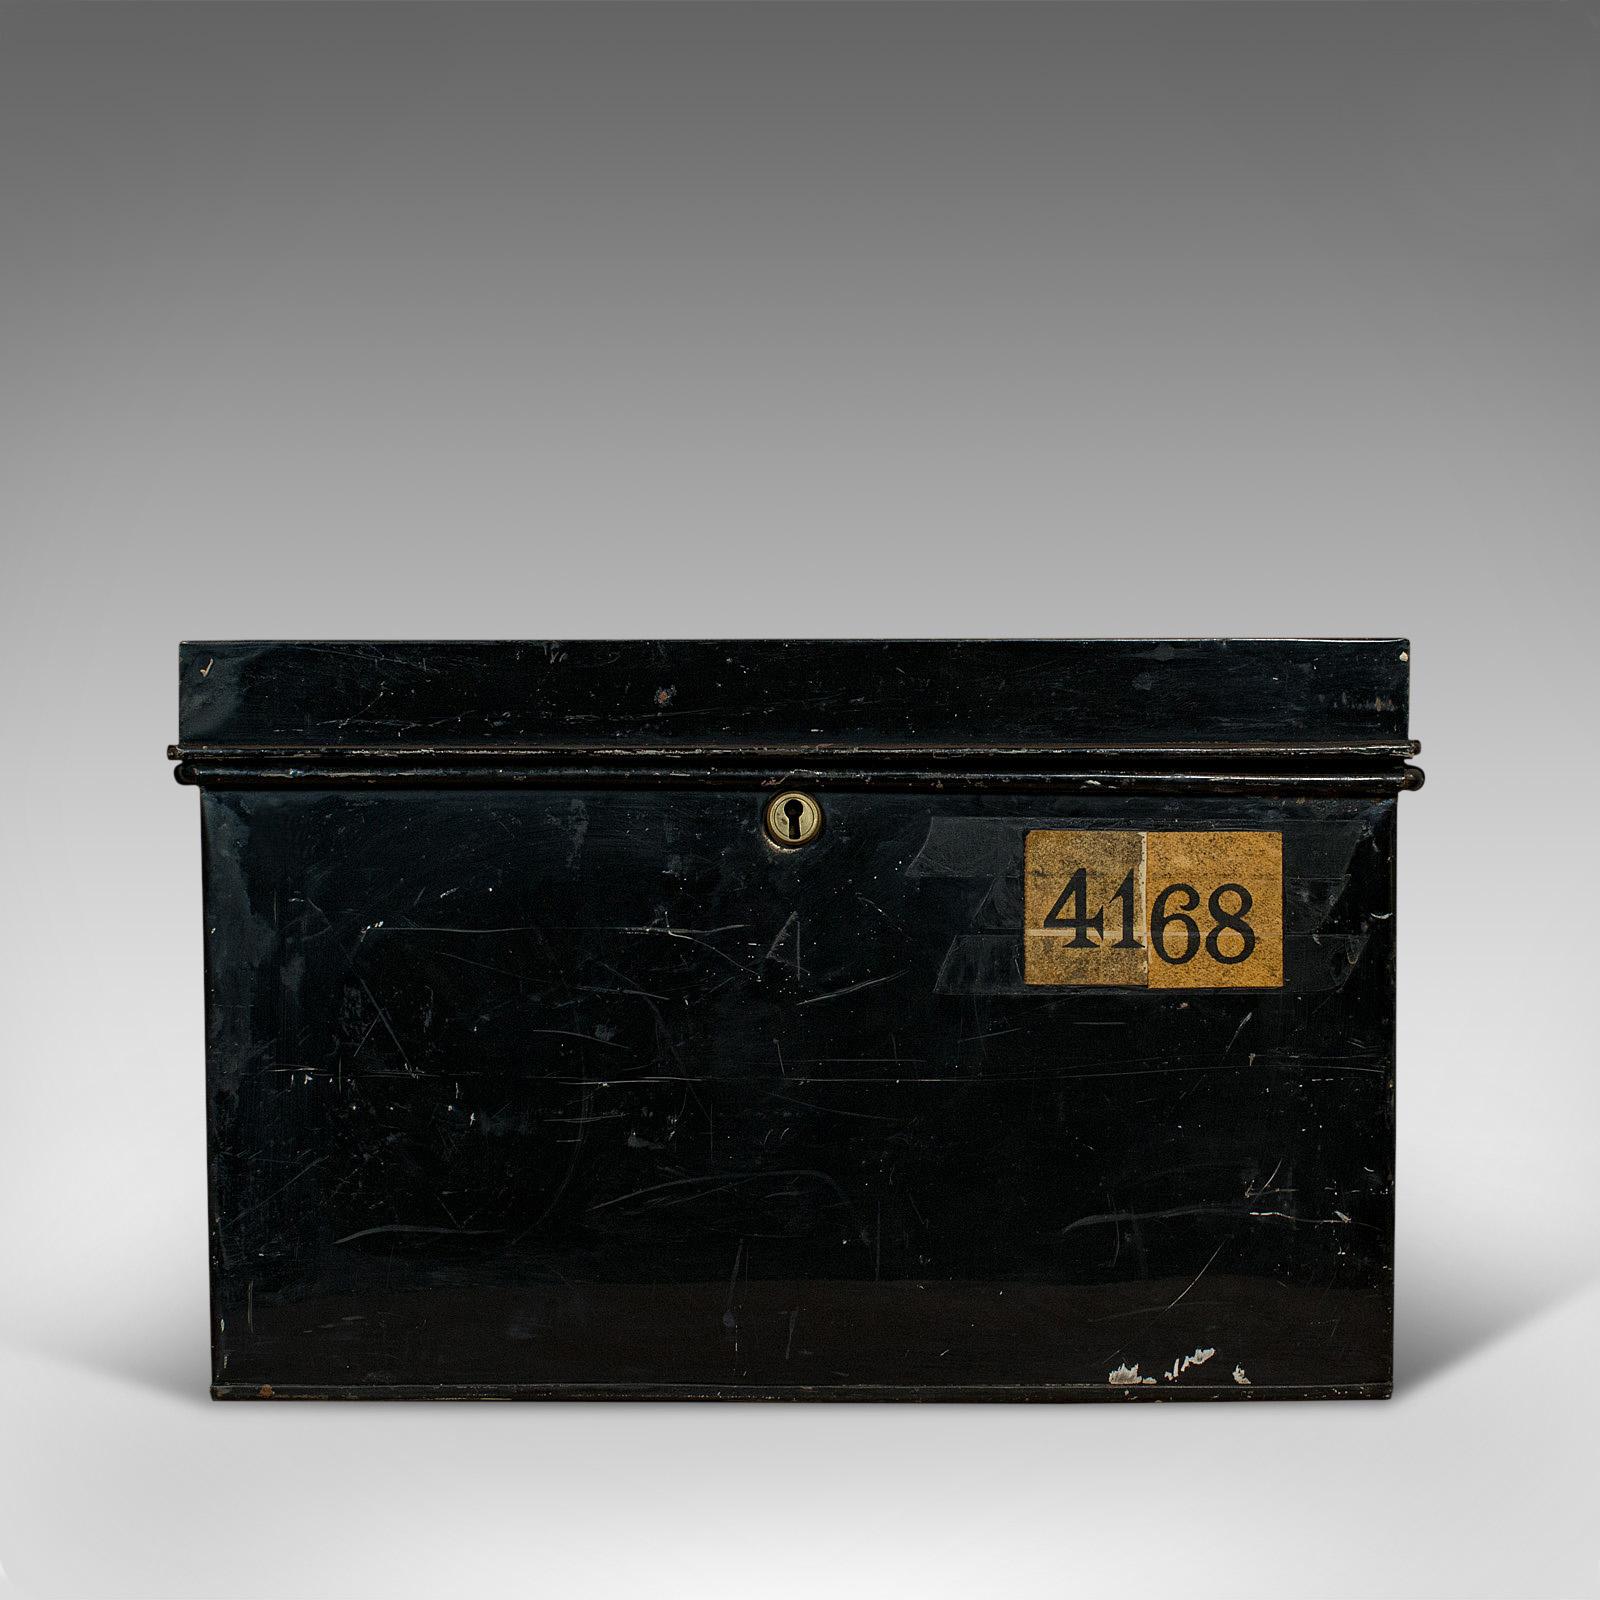 Painted Vintage Deposit Box, English, Metal, Document Chest, 20th Century, circa 1940